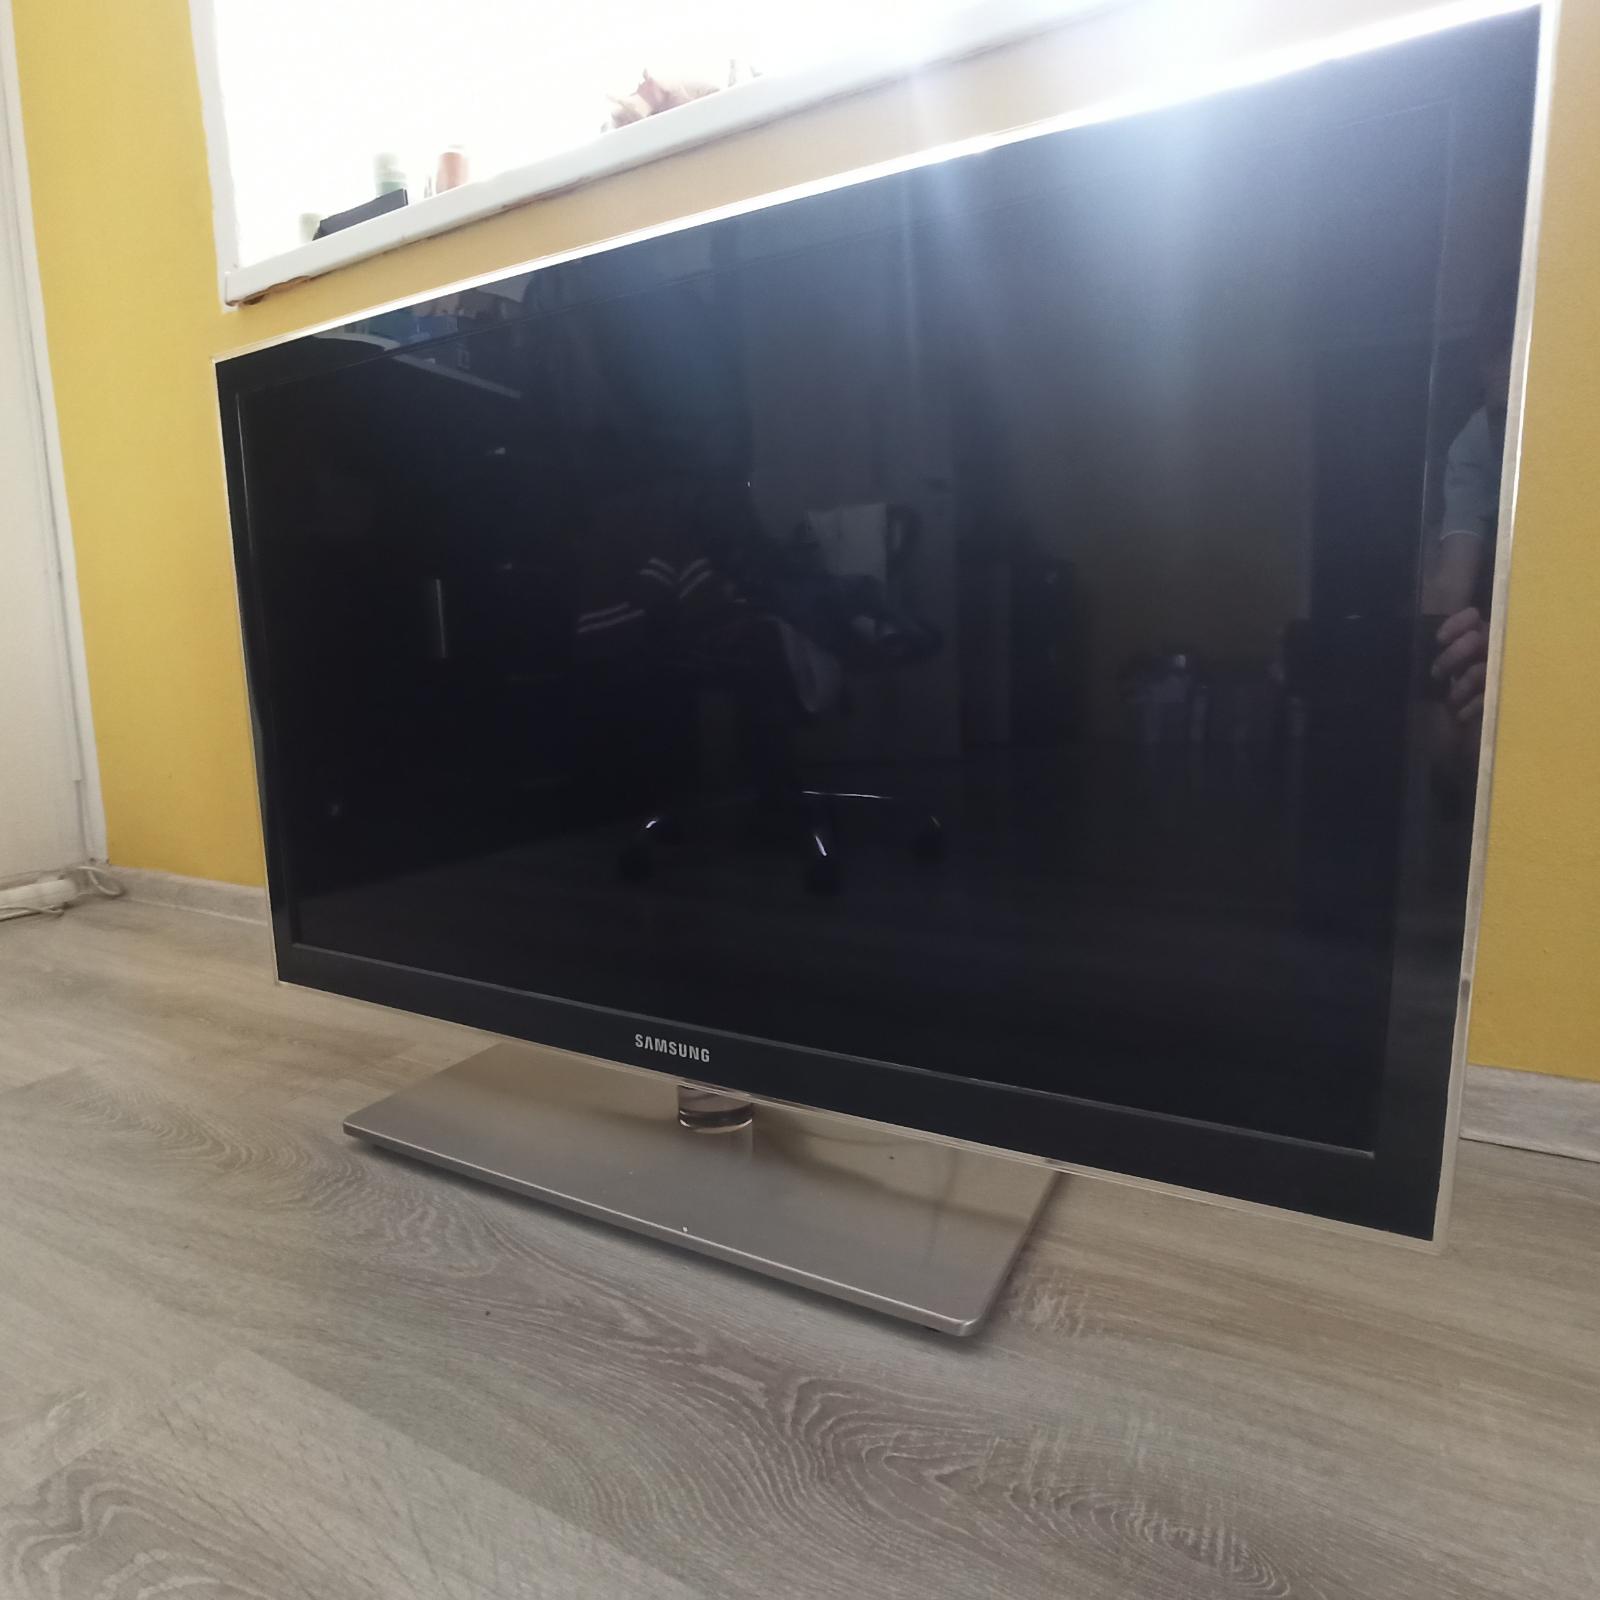 Led Tv Samsung Ue40c6000 Aukro 8467